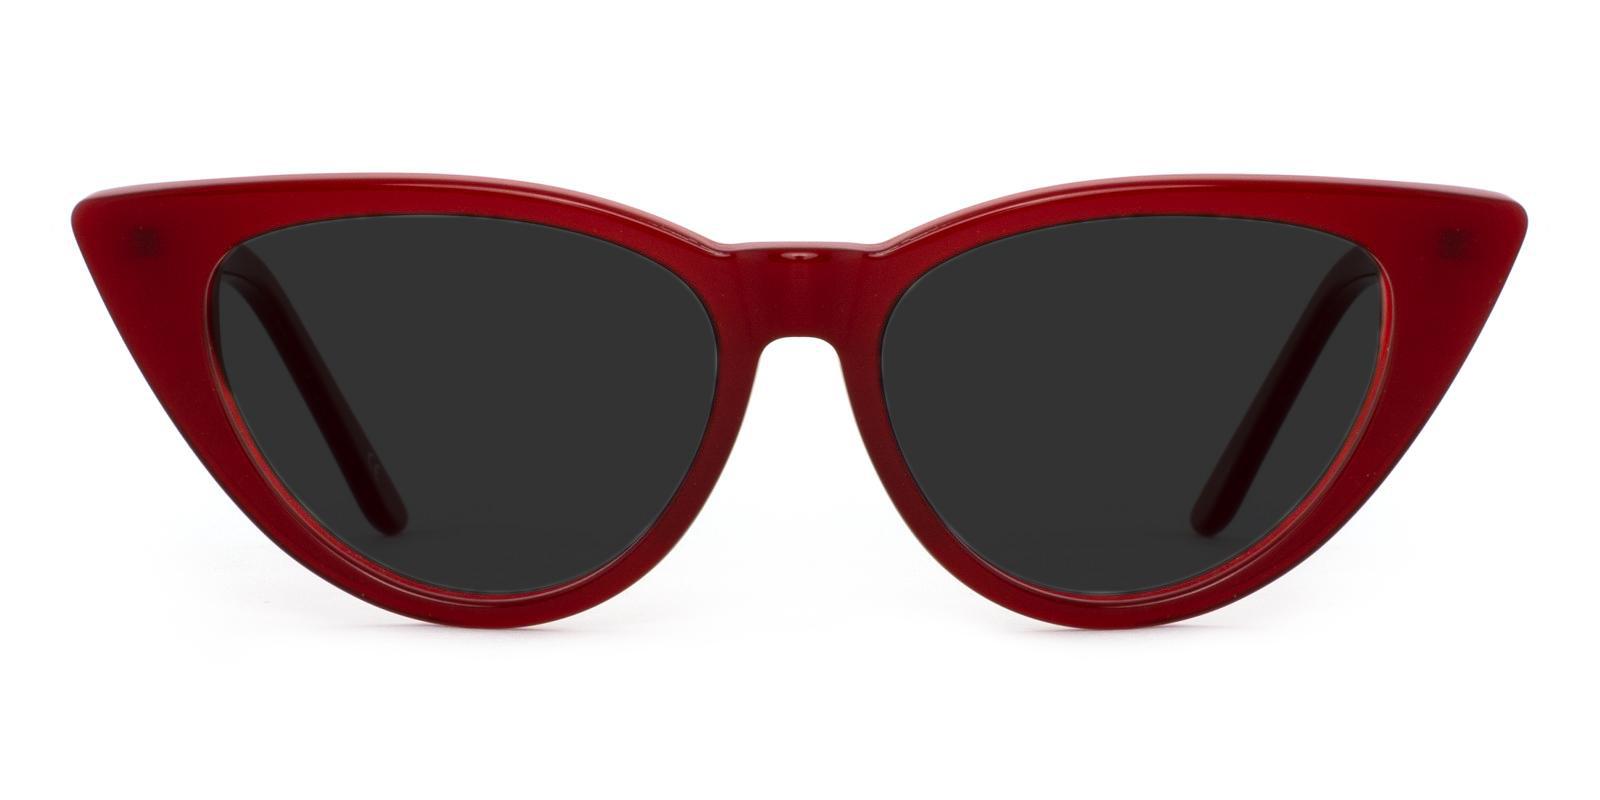 Escape Red Acetate SpringHinges , Sunglasses , UniversalBridgeFit Frames from ABBE Glasses